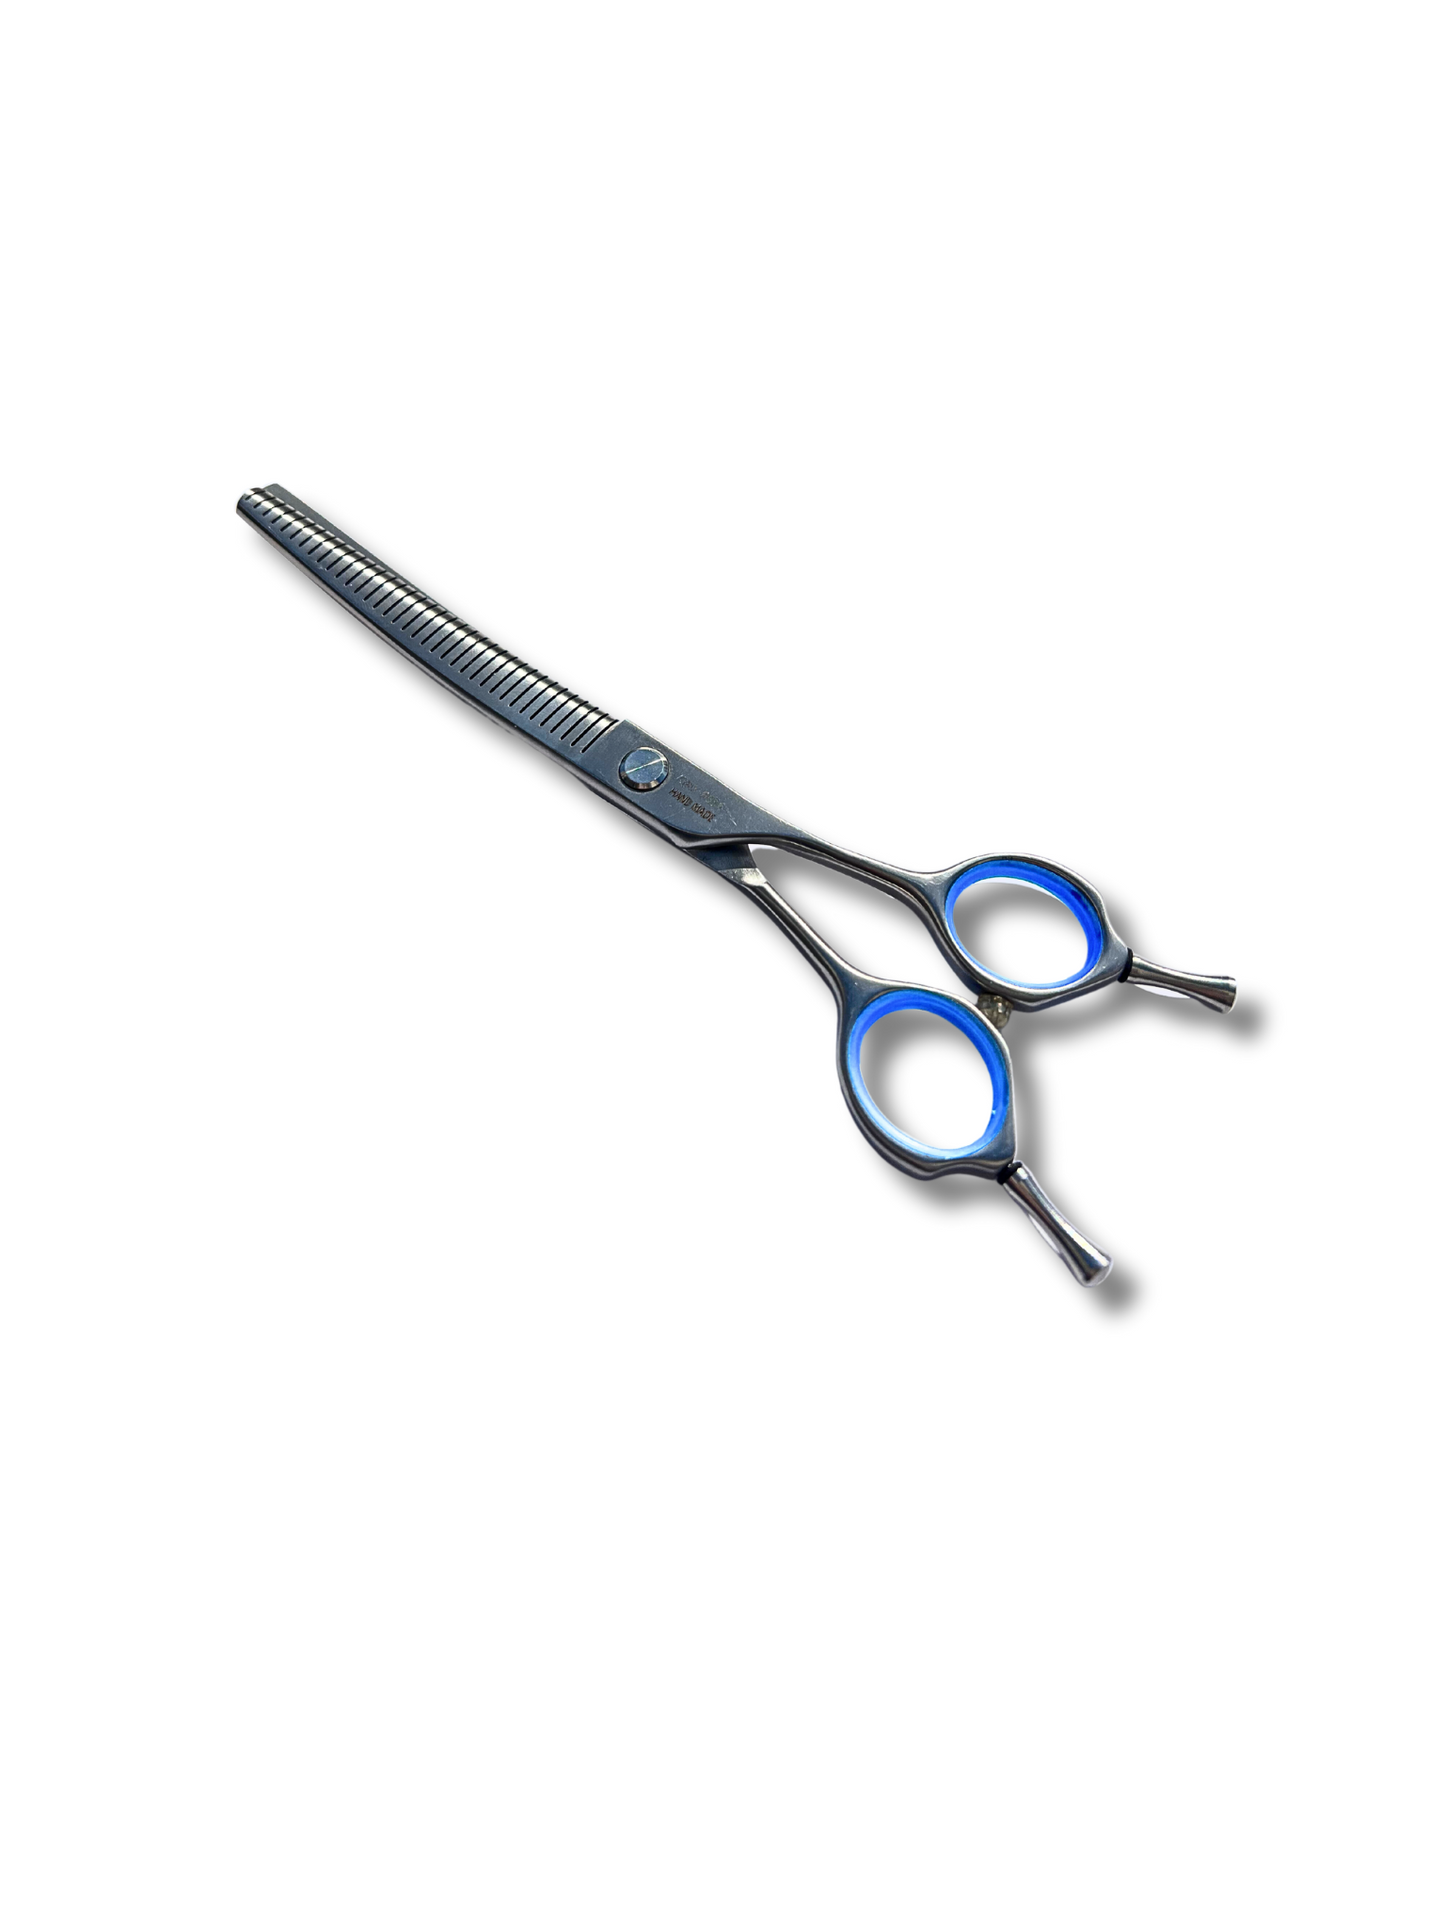 QRB-6536 professional curved shearing scissor 6.5" 36 teeth